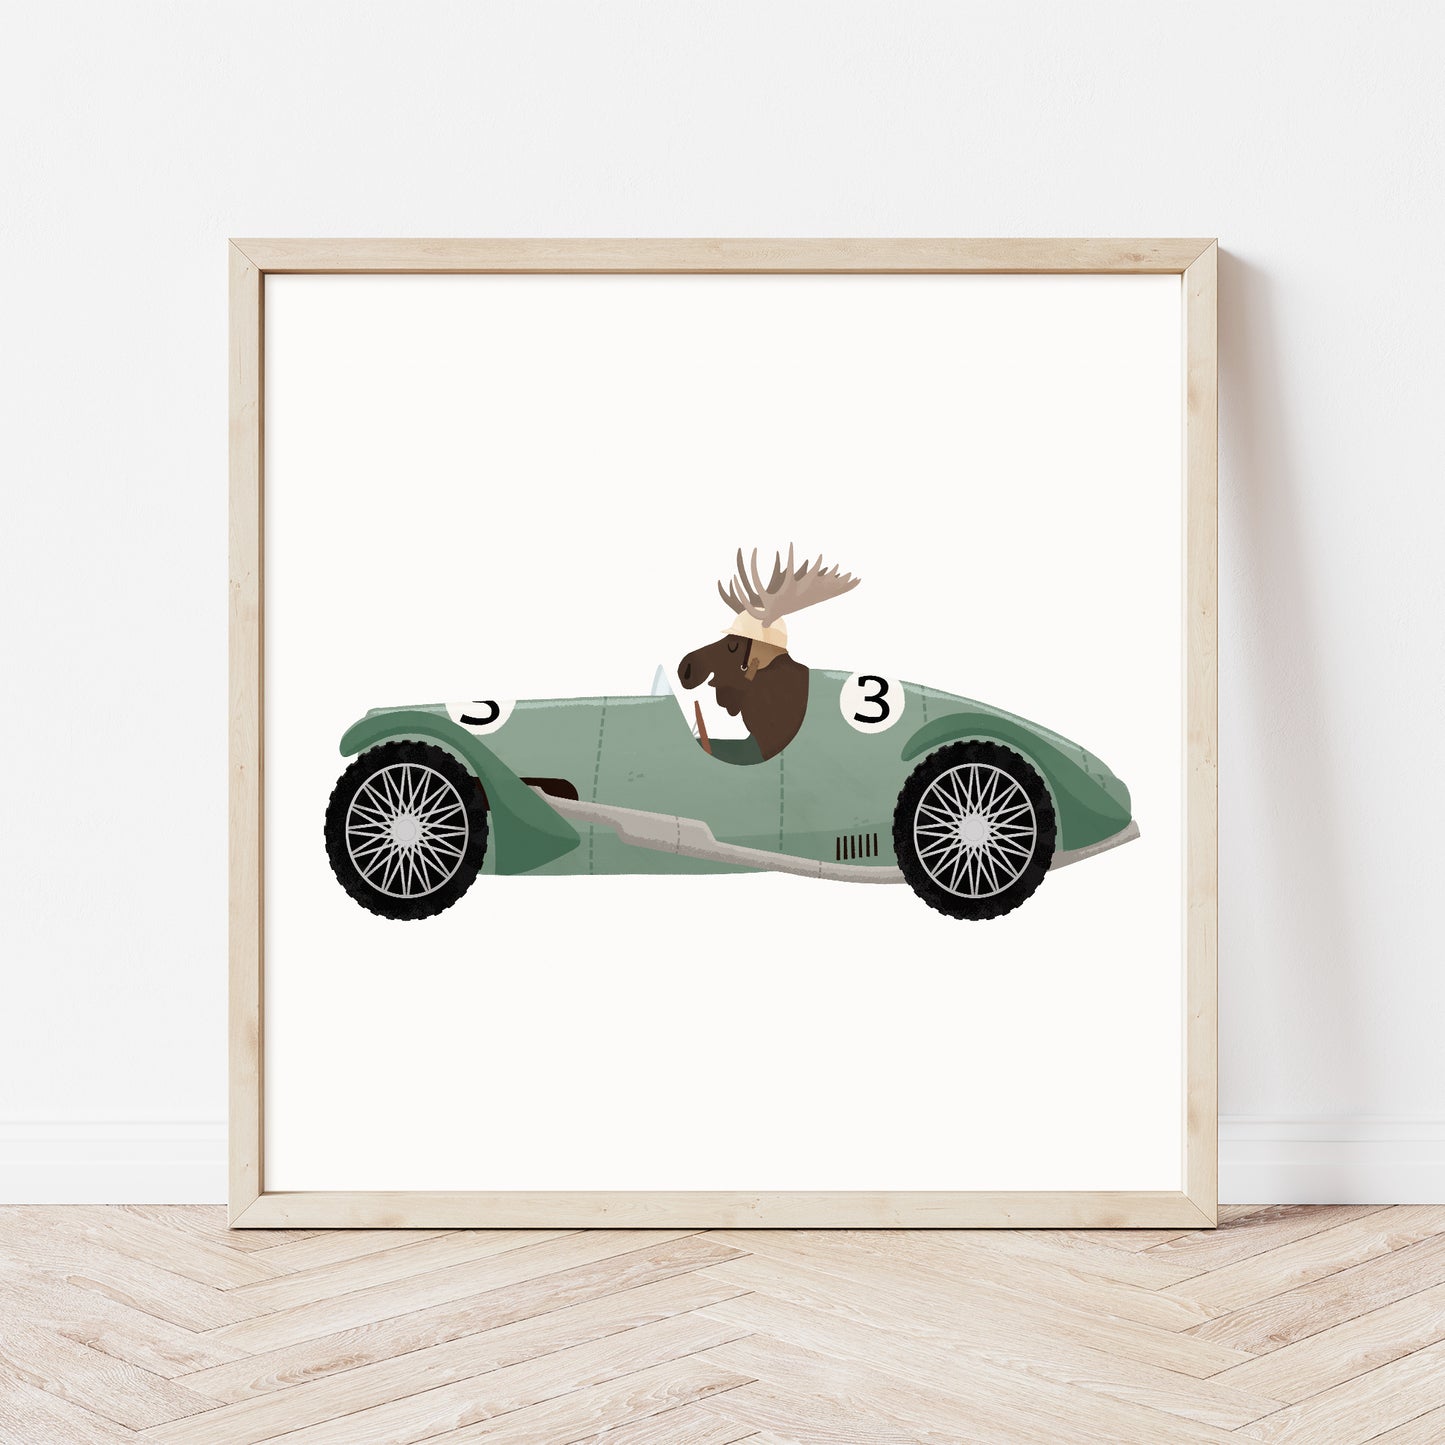 Set of six vintage racing cars prints